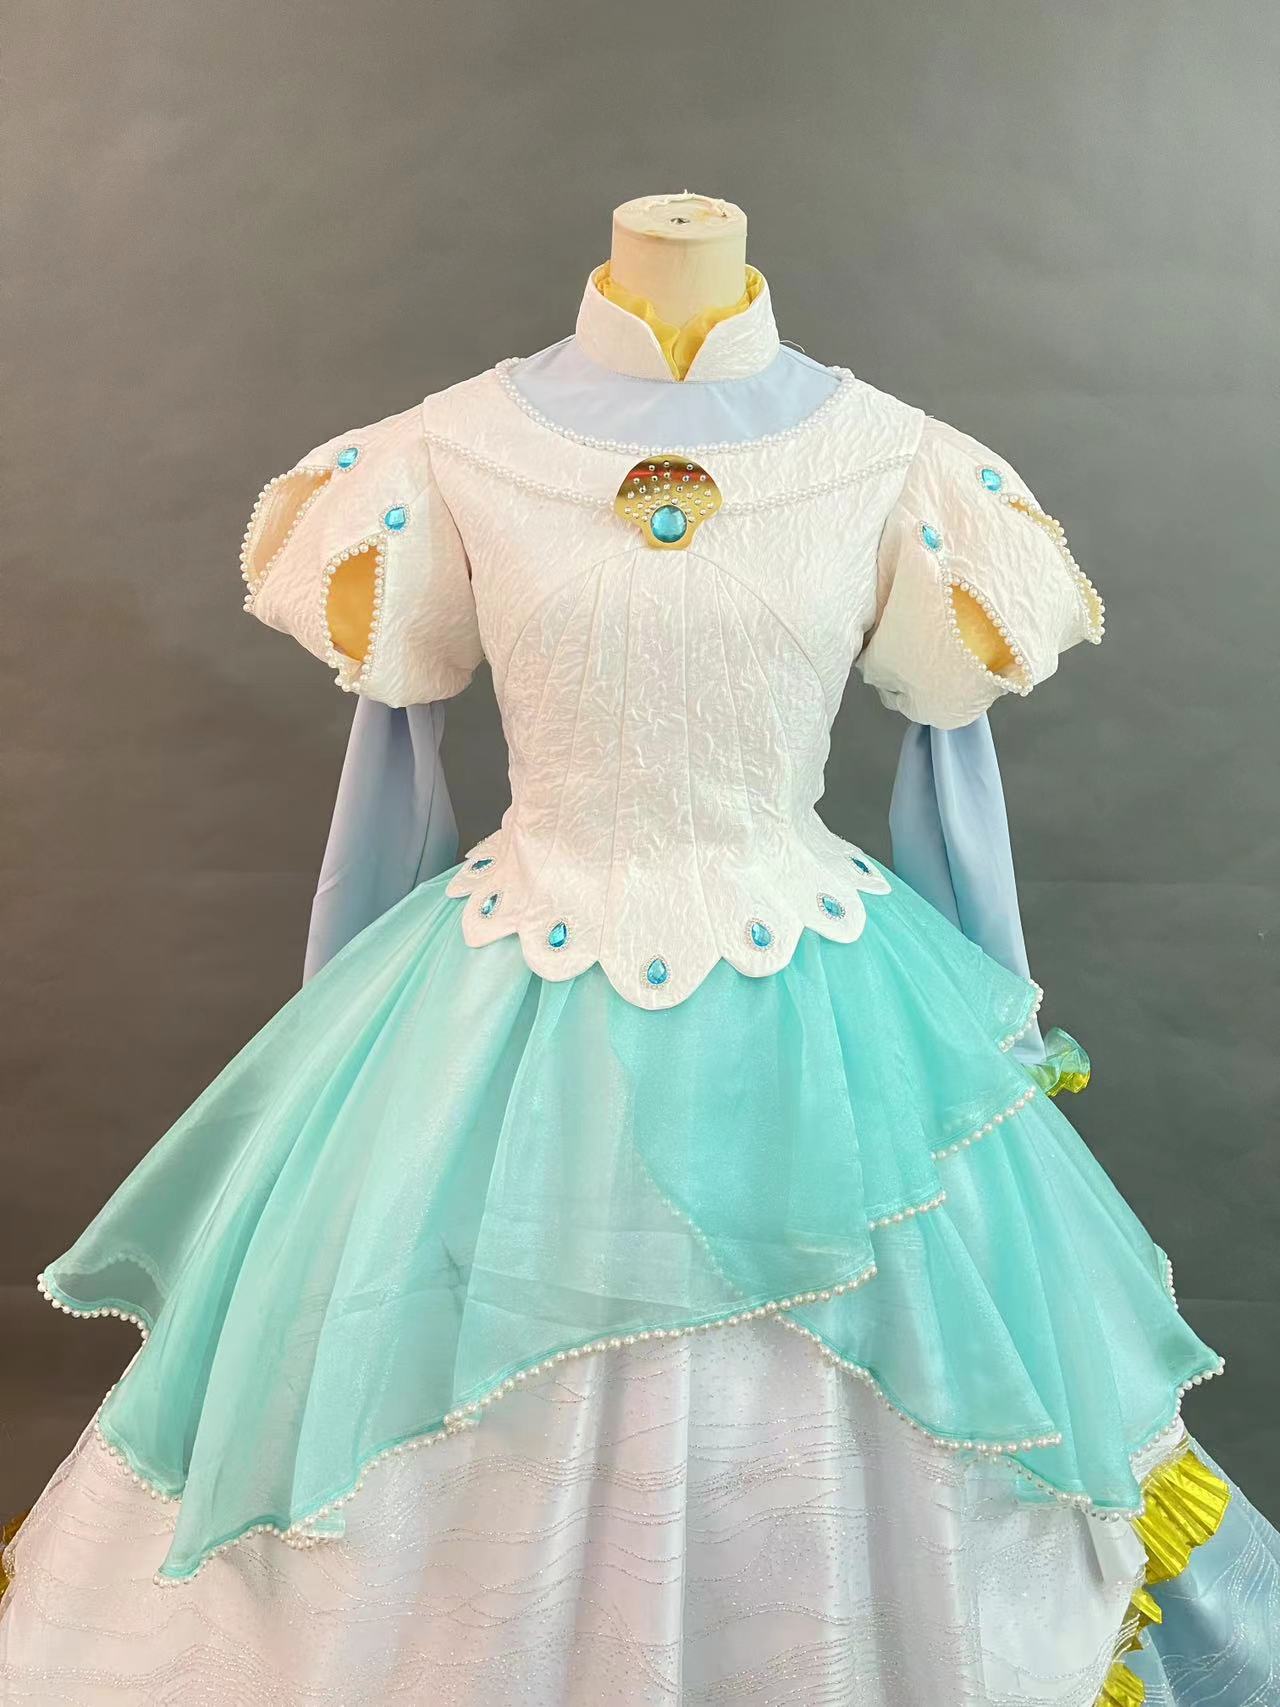 The Litter Mermaid Ariel Princess Dress Cosplay Costume